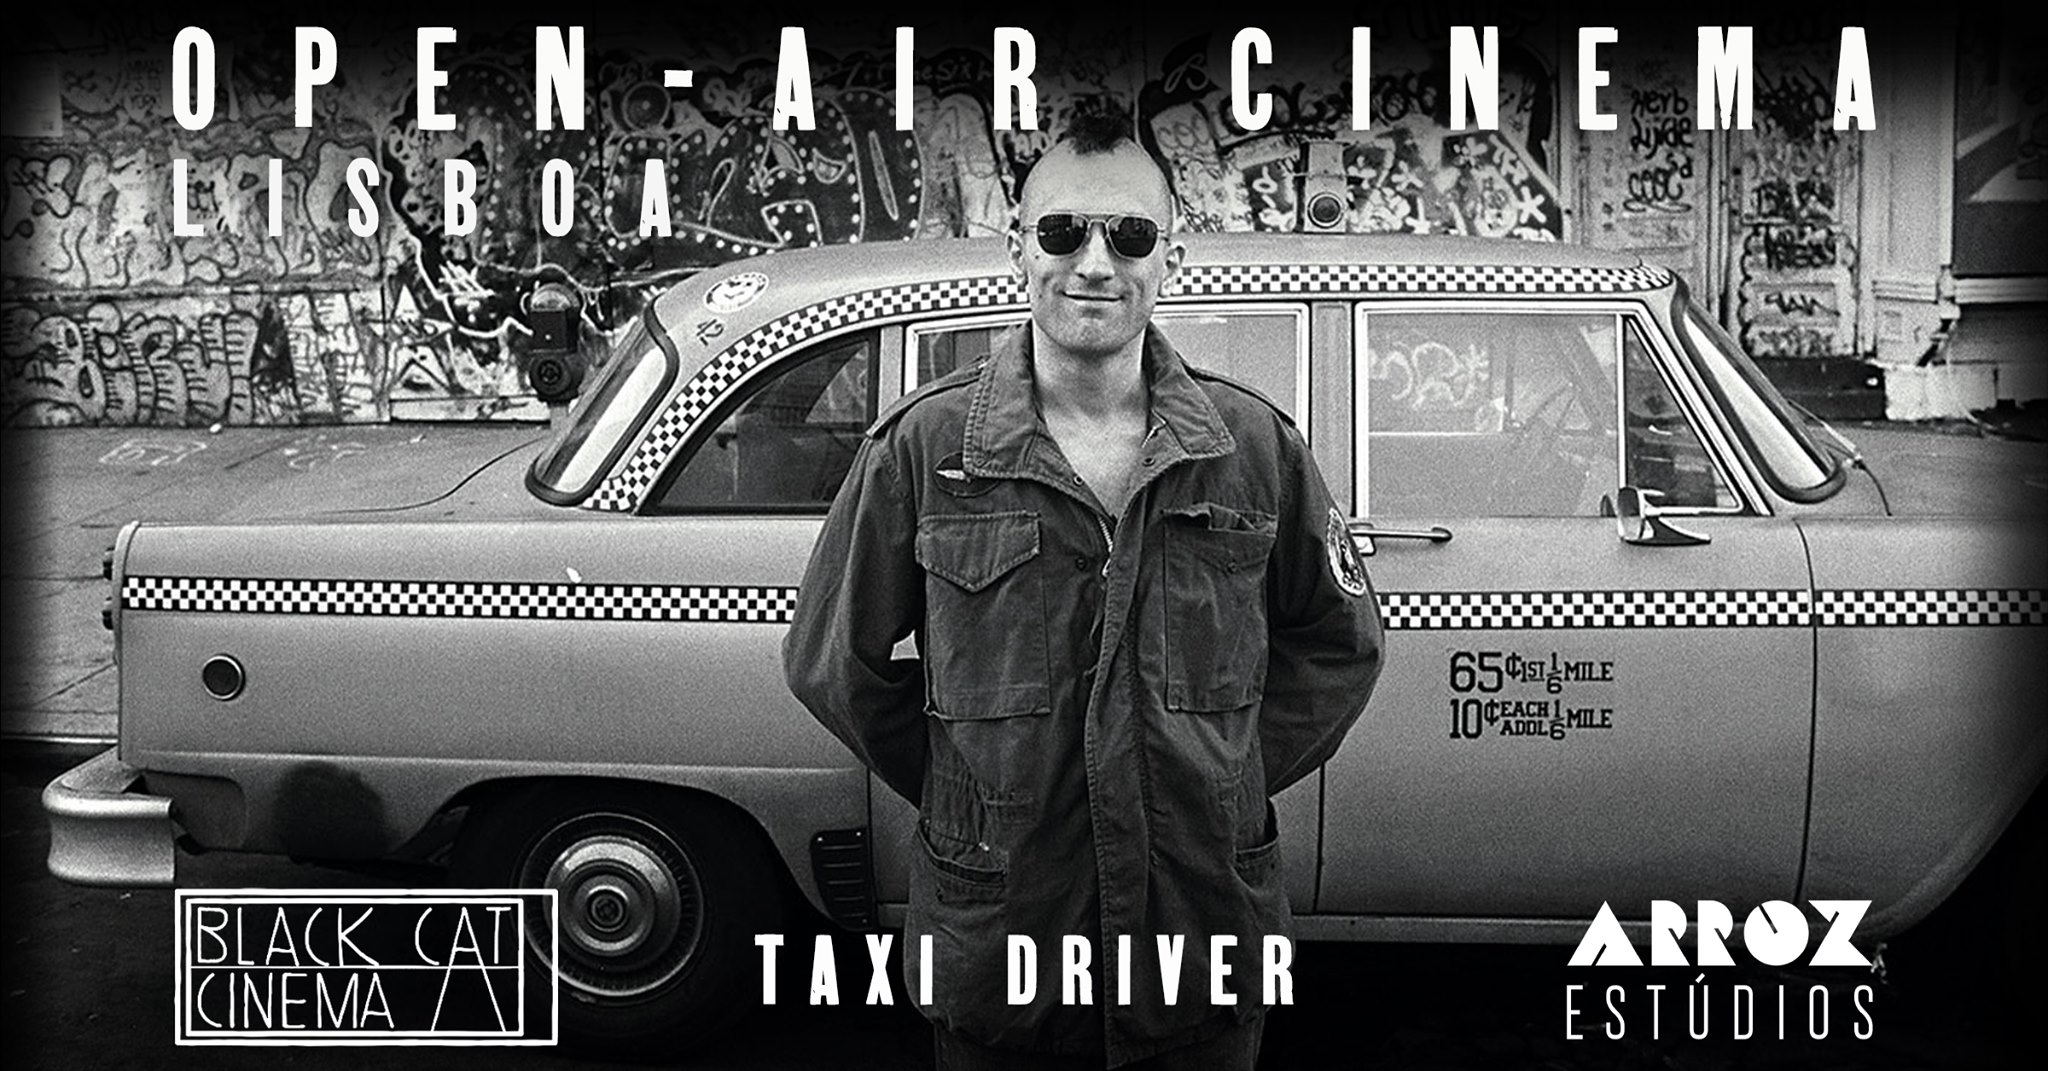 Open-air cinema: Taxi Driver